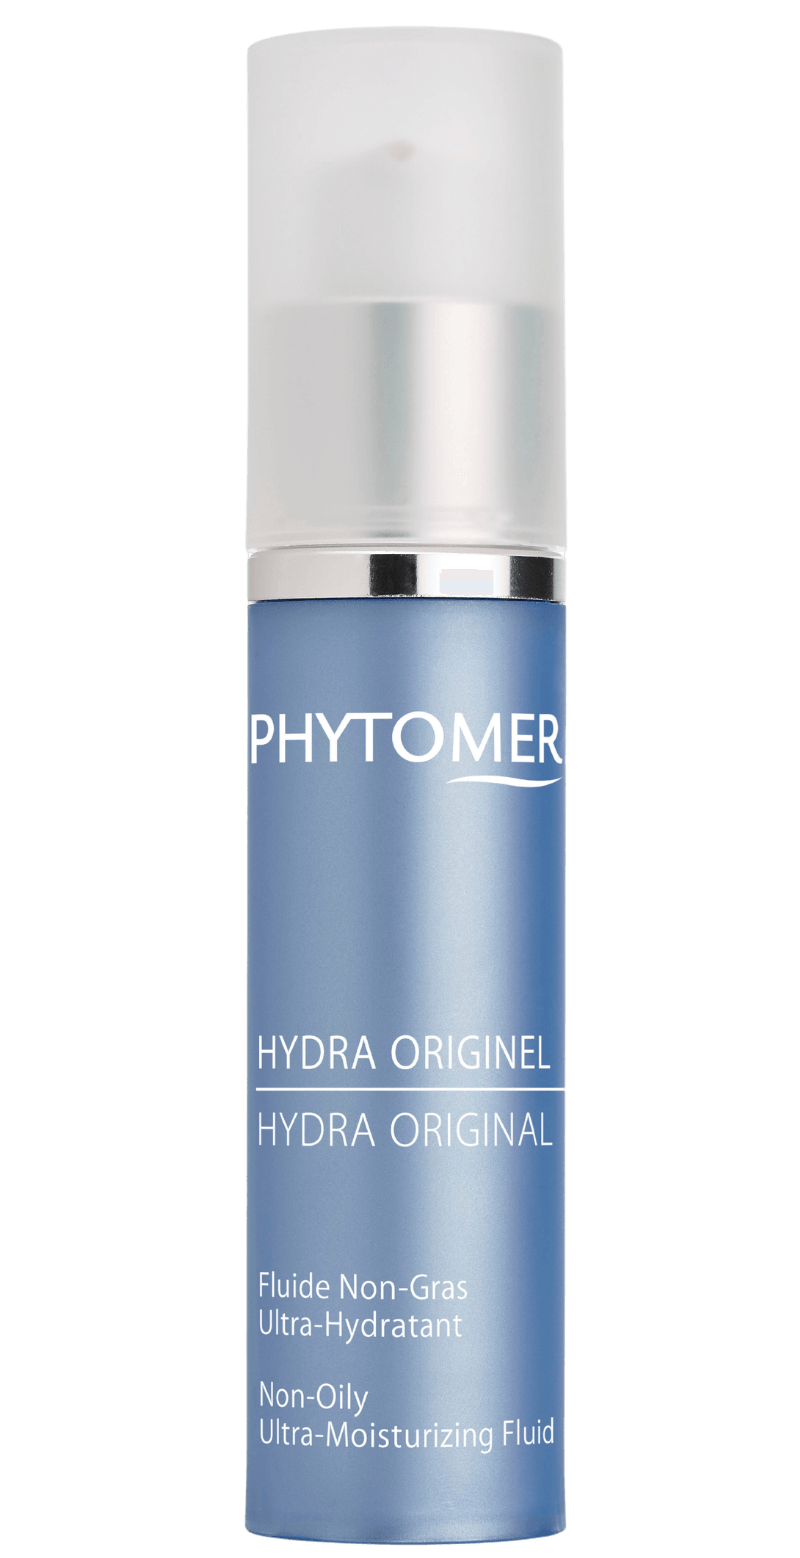 's Phytomer HYDRA ORIGINAL Non-Oily Ultra-Moisturizing Fluid - Bellini's Skin and Parfumerie 